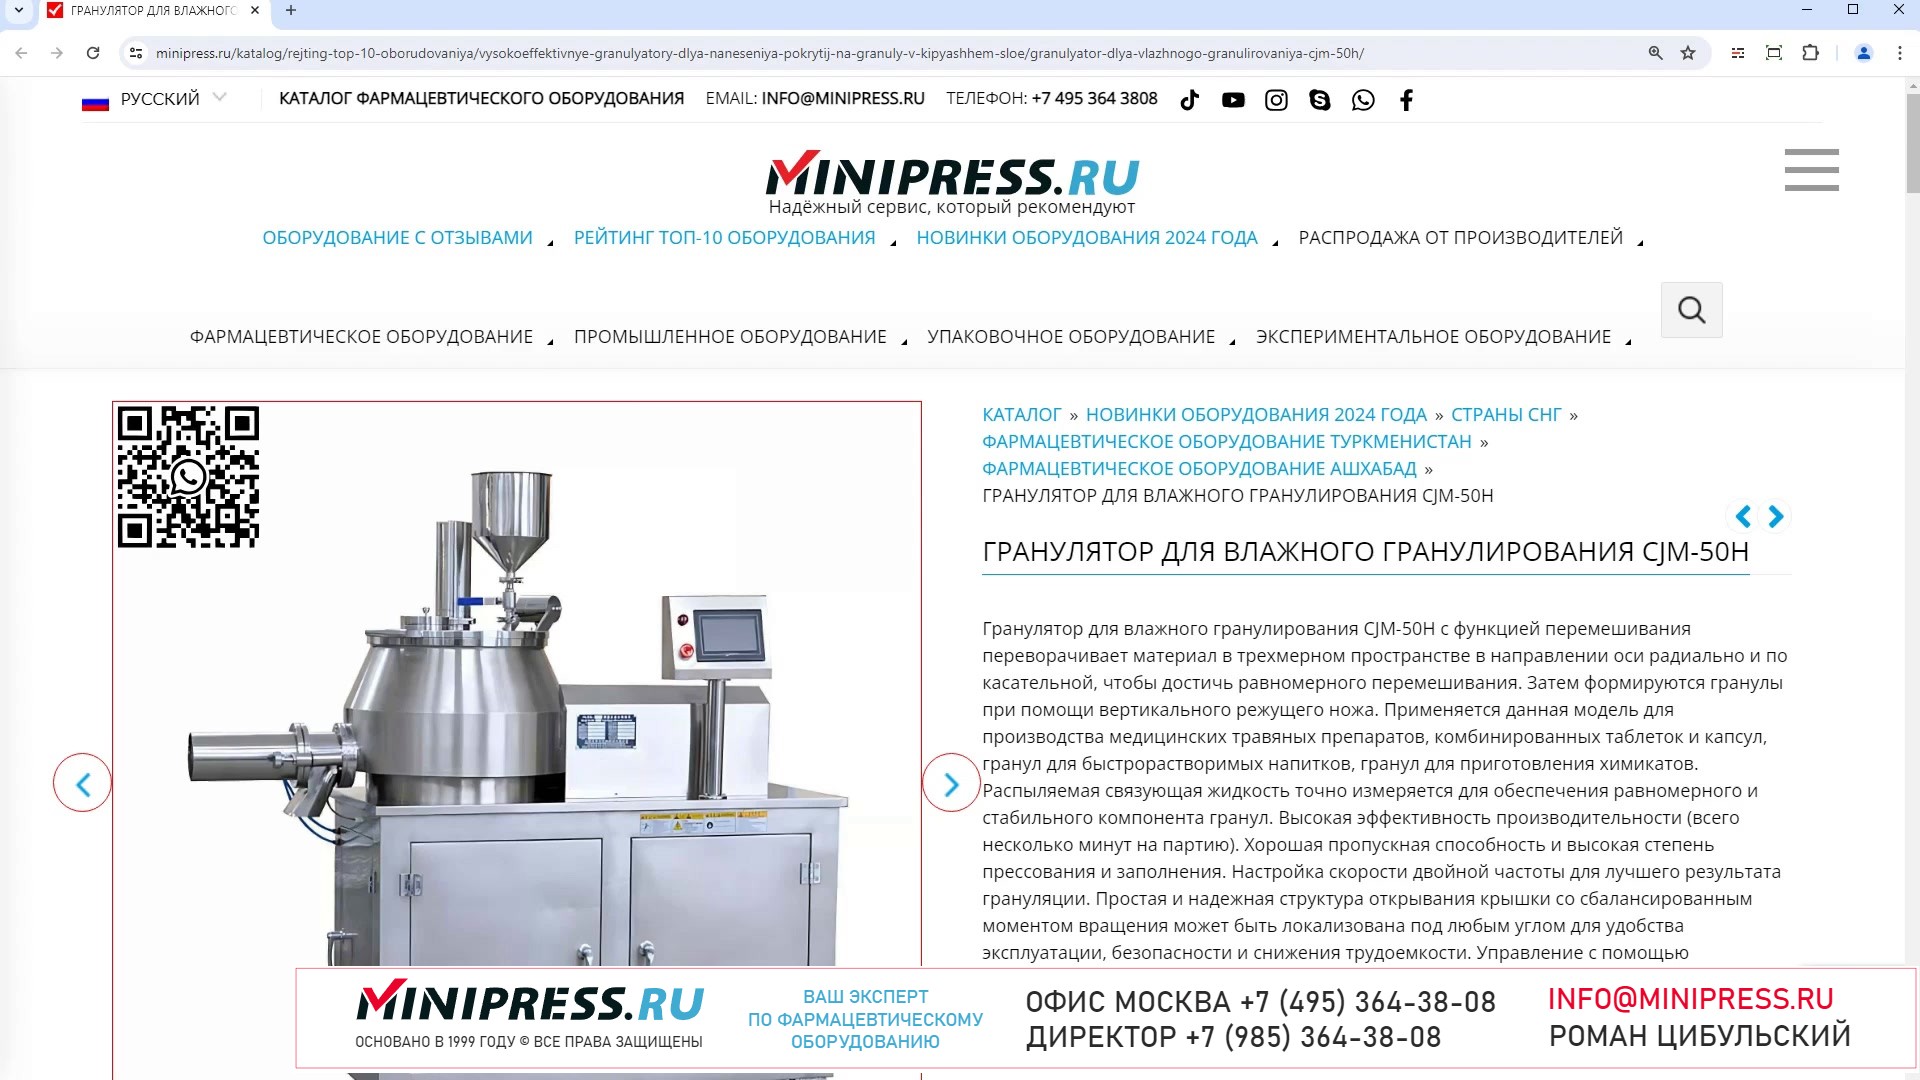 Minipress.ru Гранулятор для влажного гранулирования CJM-50H